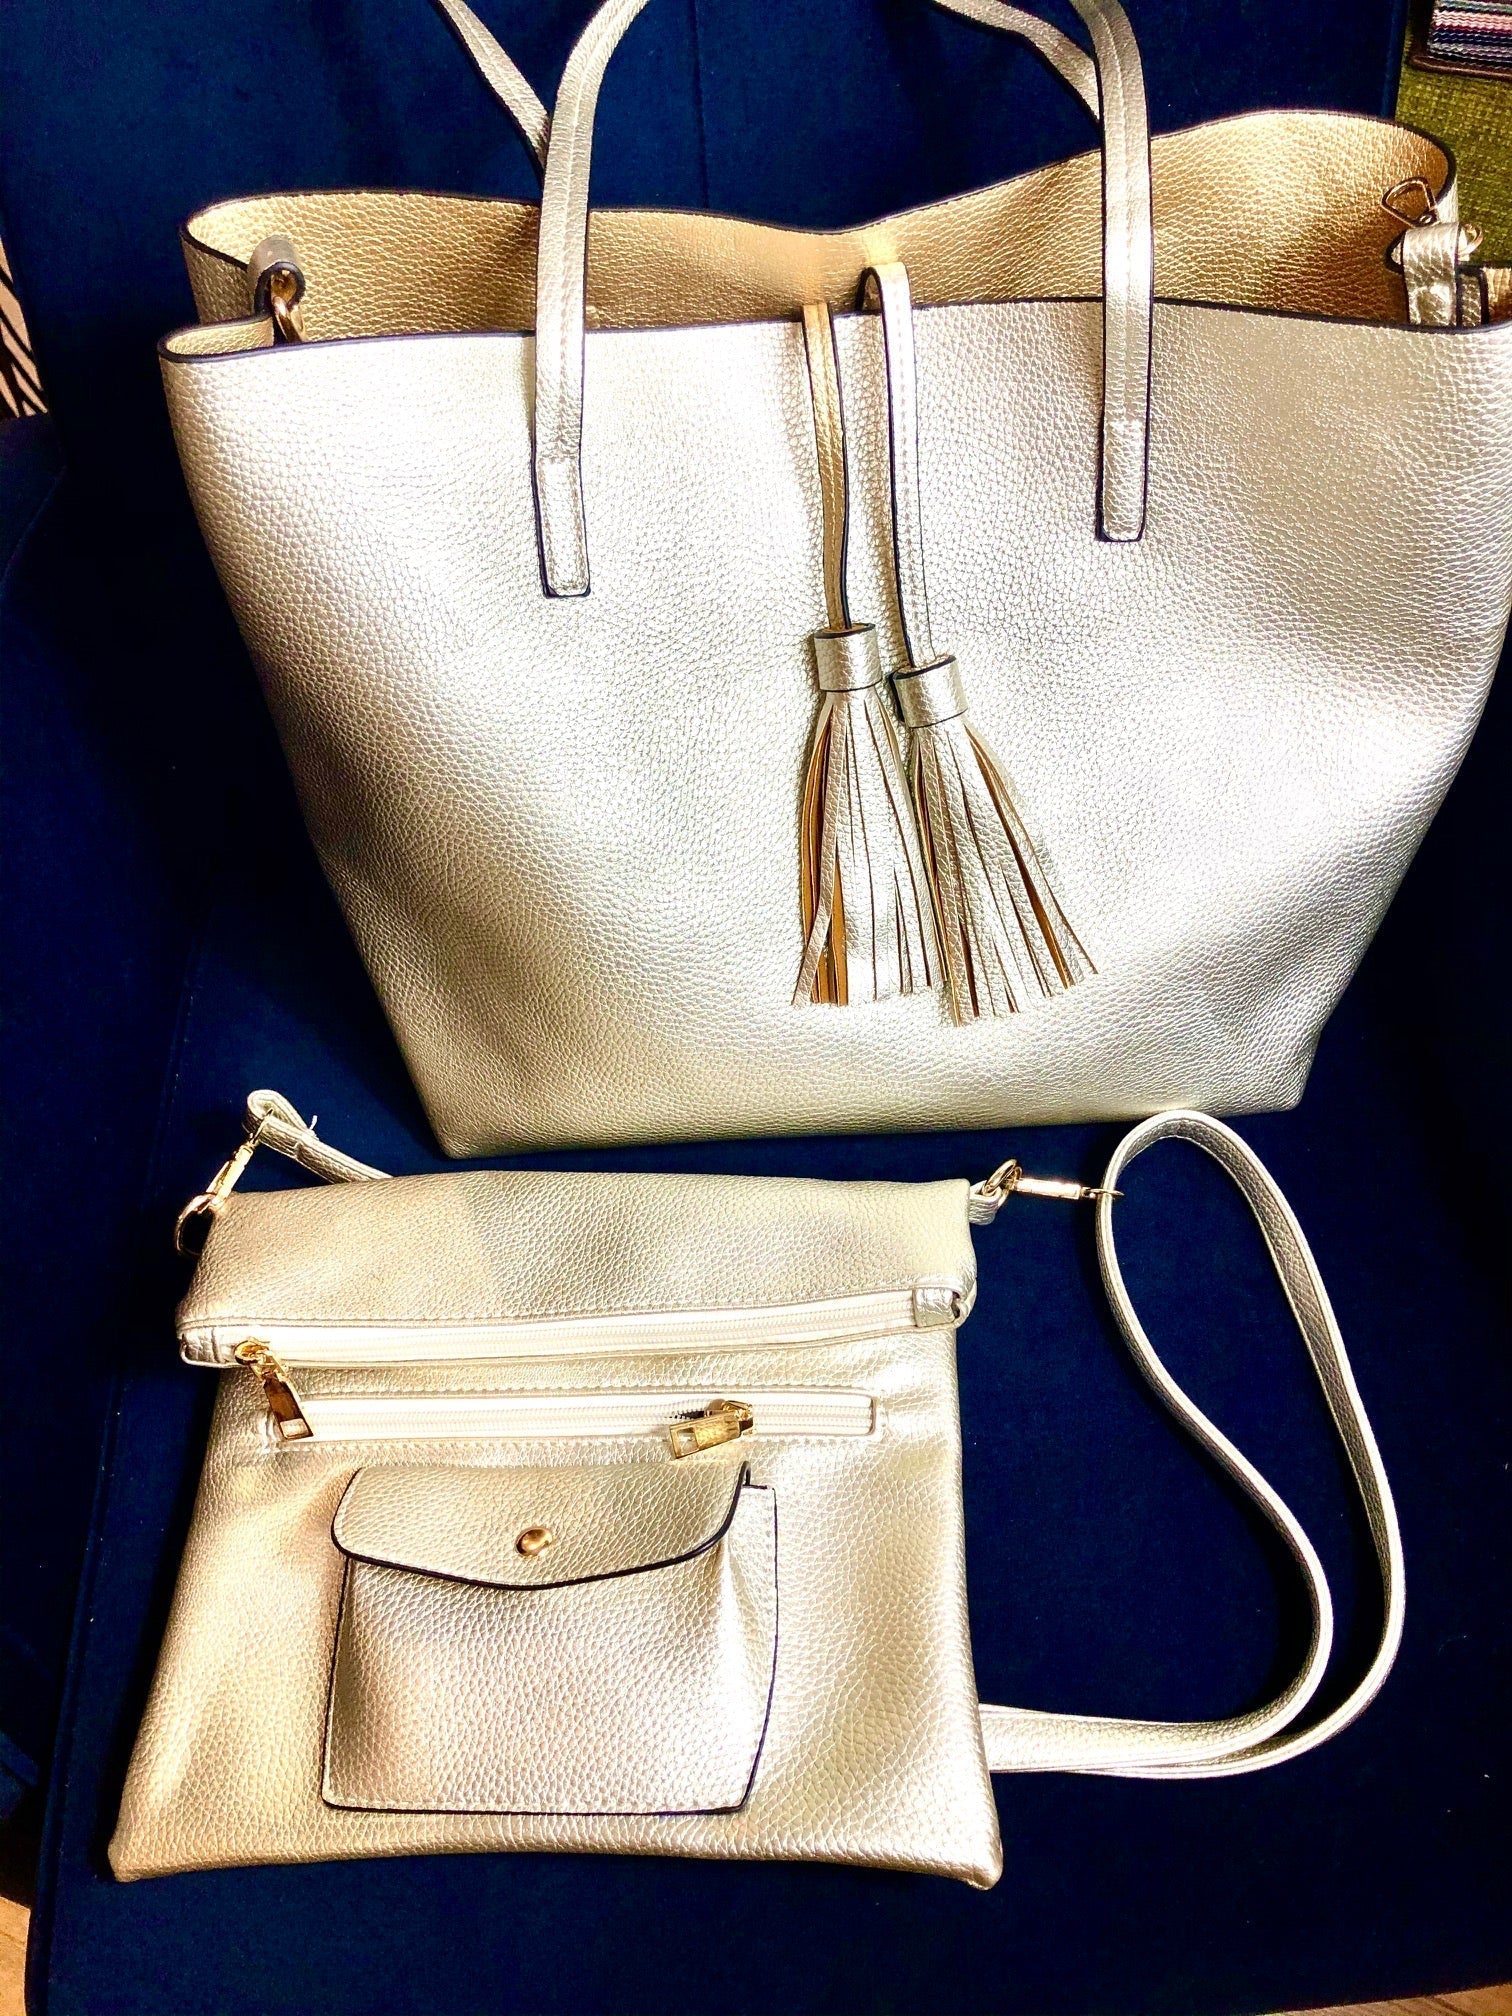 Silver & Gold Tote Bag - The Nancy Smillie Shop - Art, Jewellery & Designer Gifts Glasgow